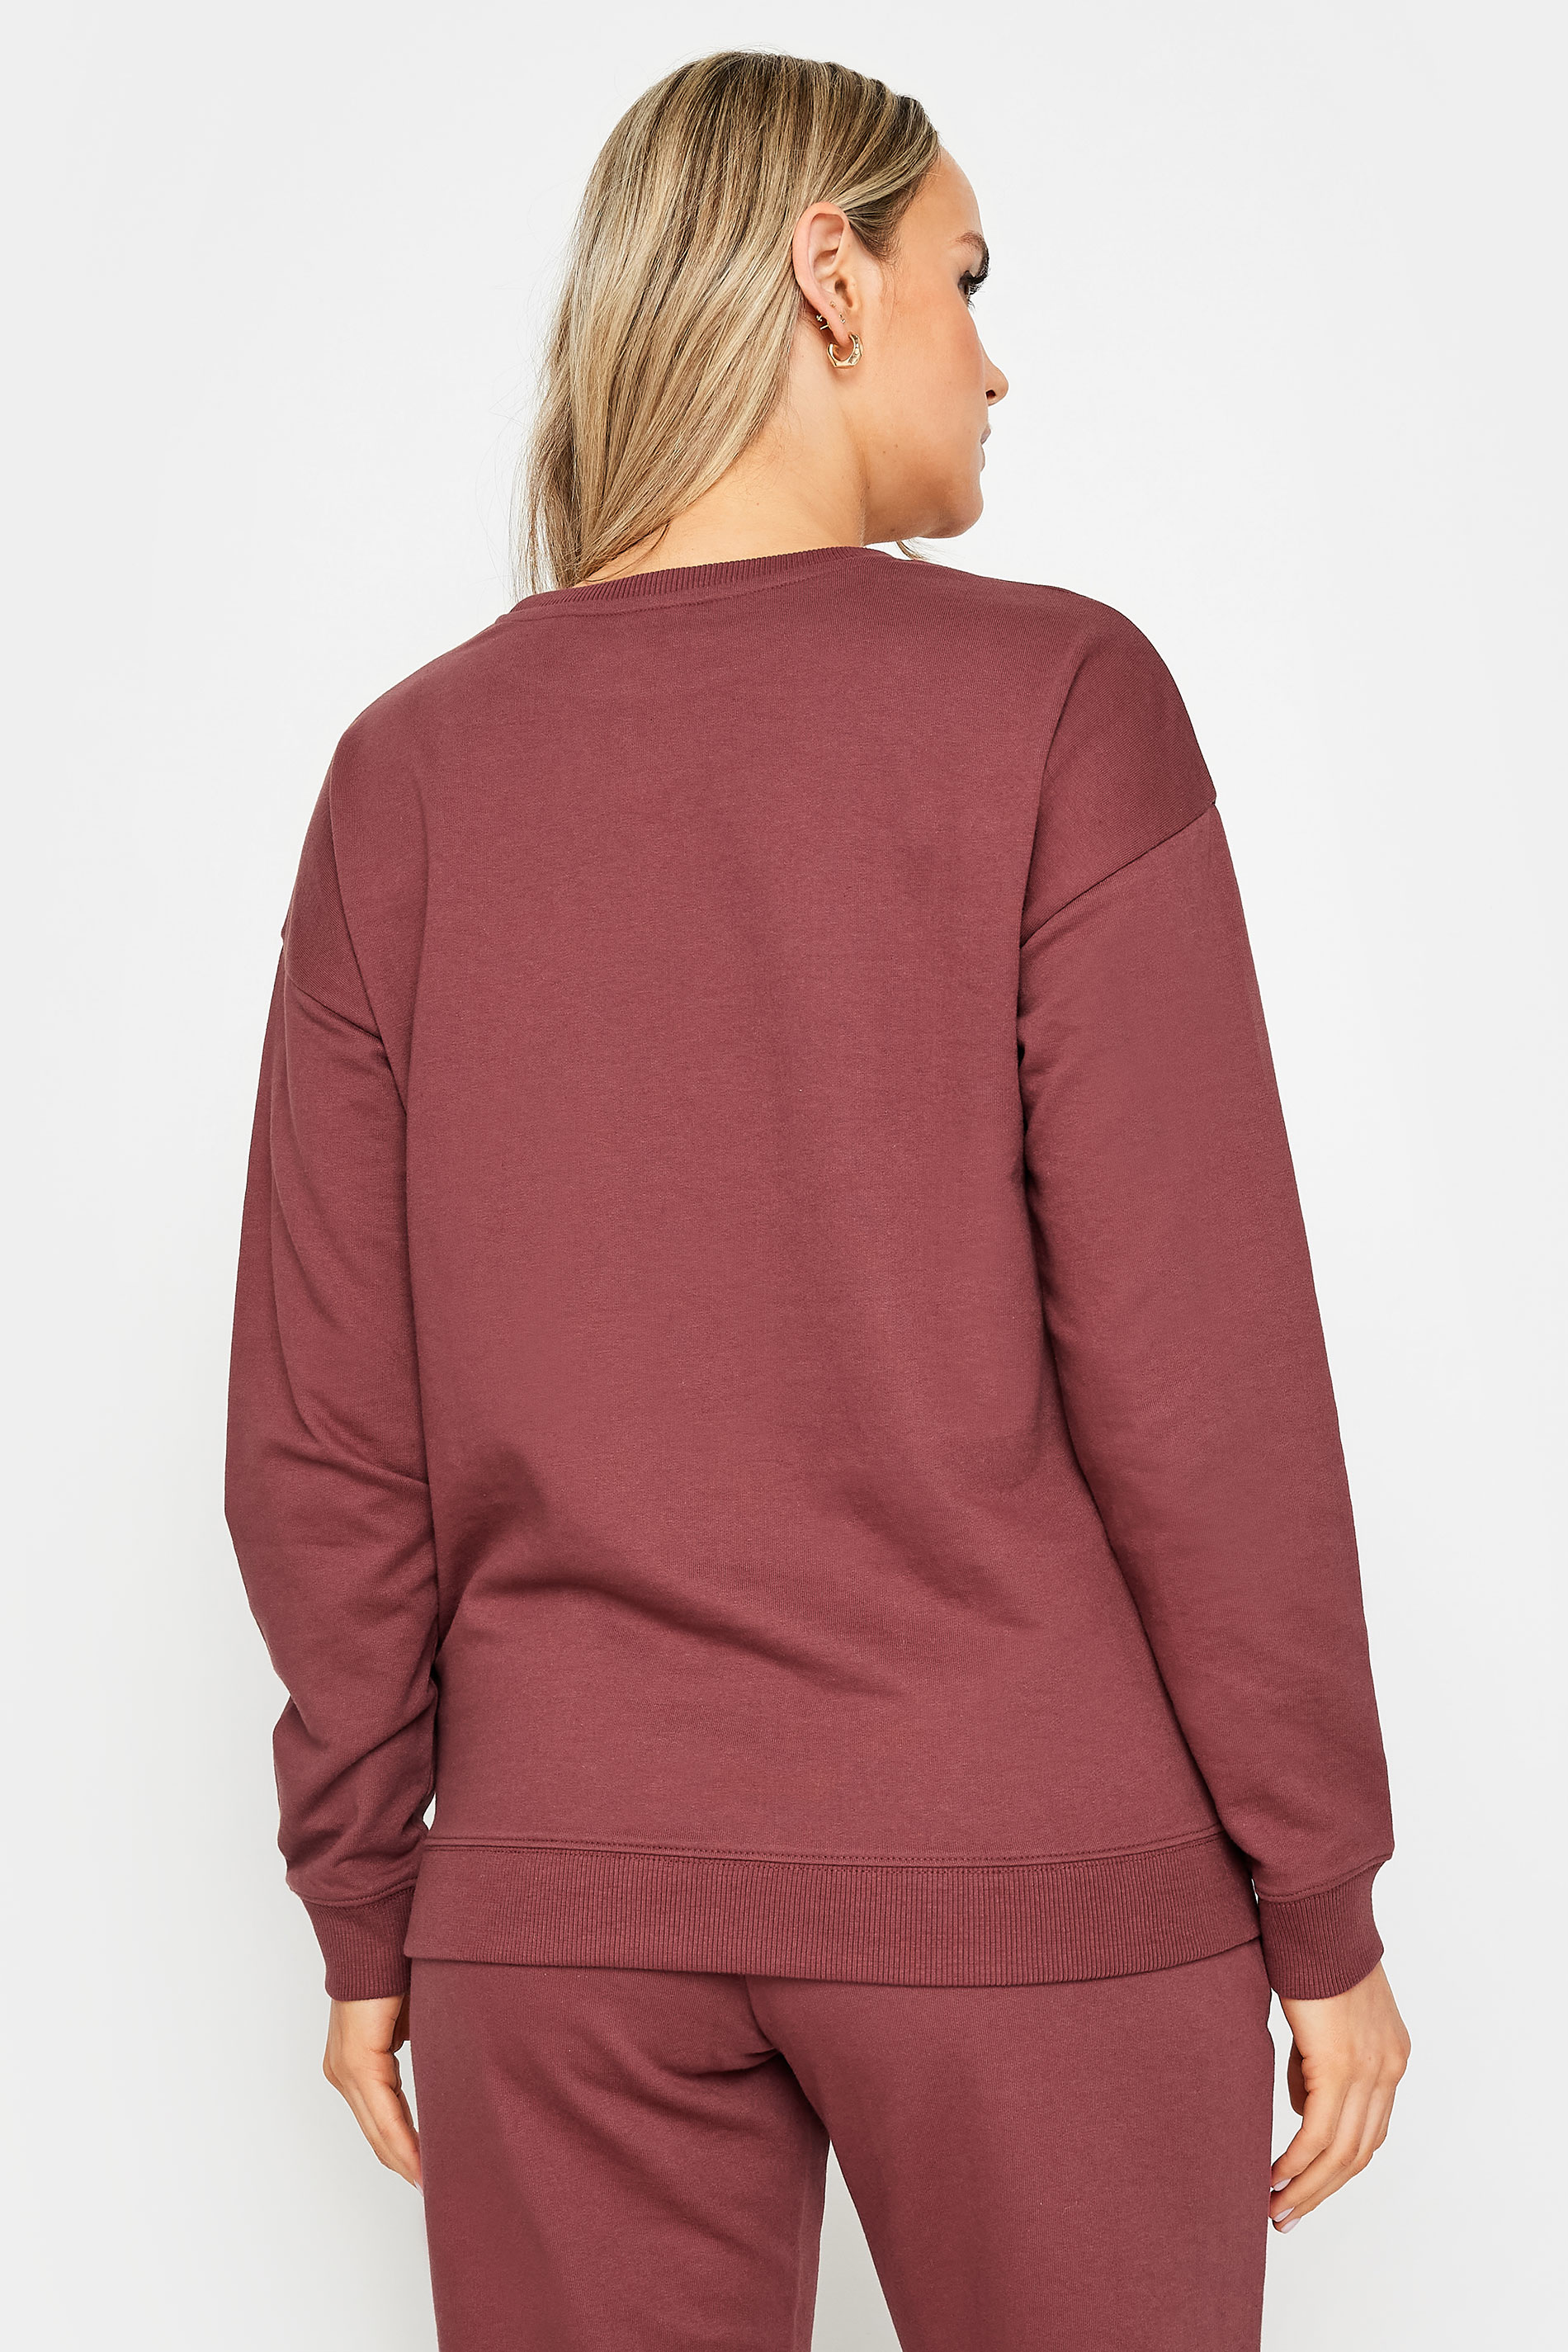 LTS Tall Women's Red Long Sleeve Sweatshirt | Long Tall Sally  3